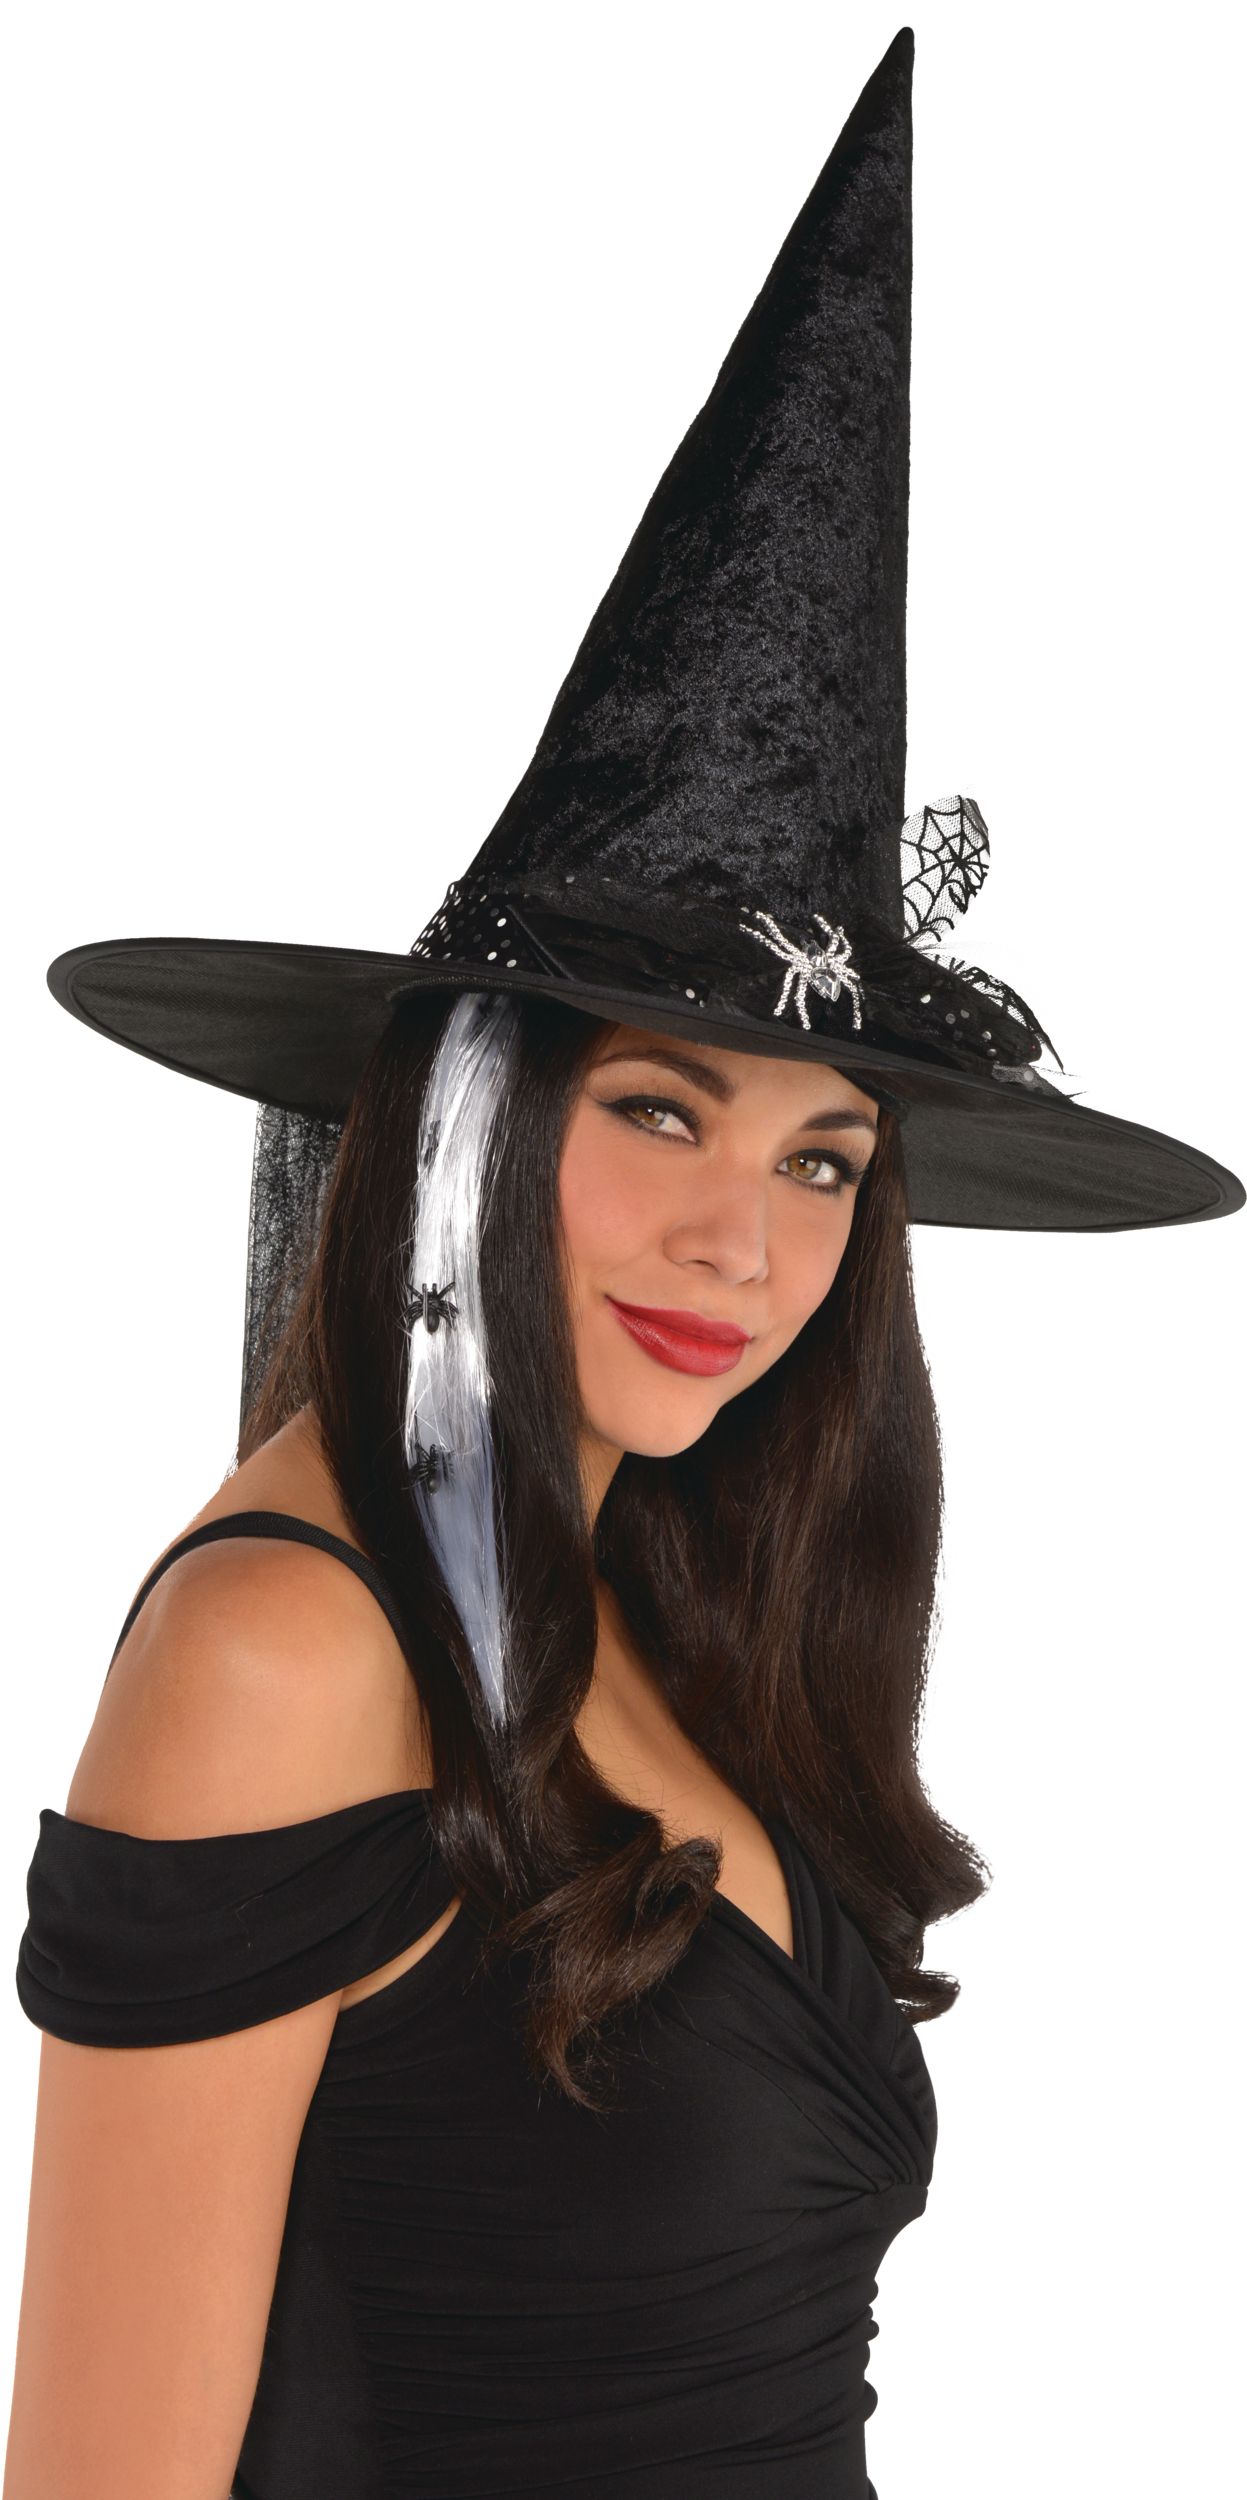 PMUYBHF 5pcs Witch Hats for Women Lace  